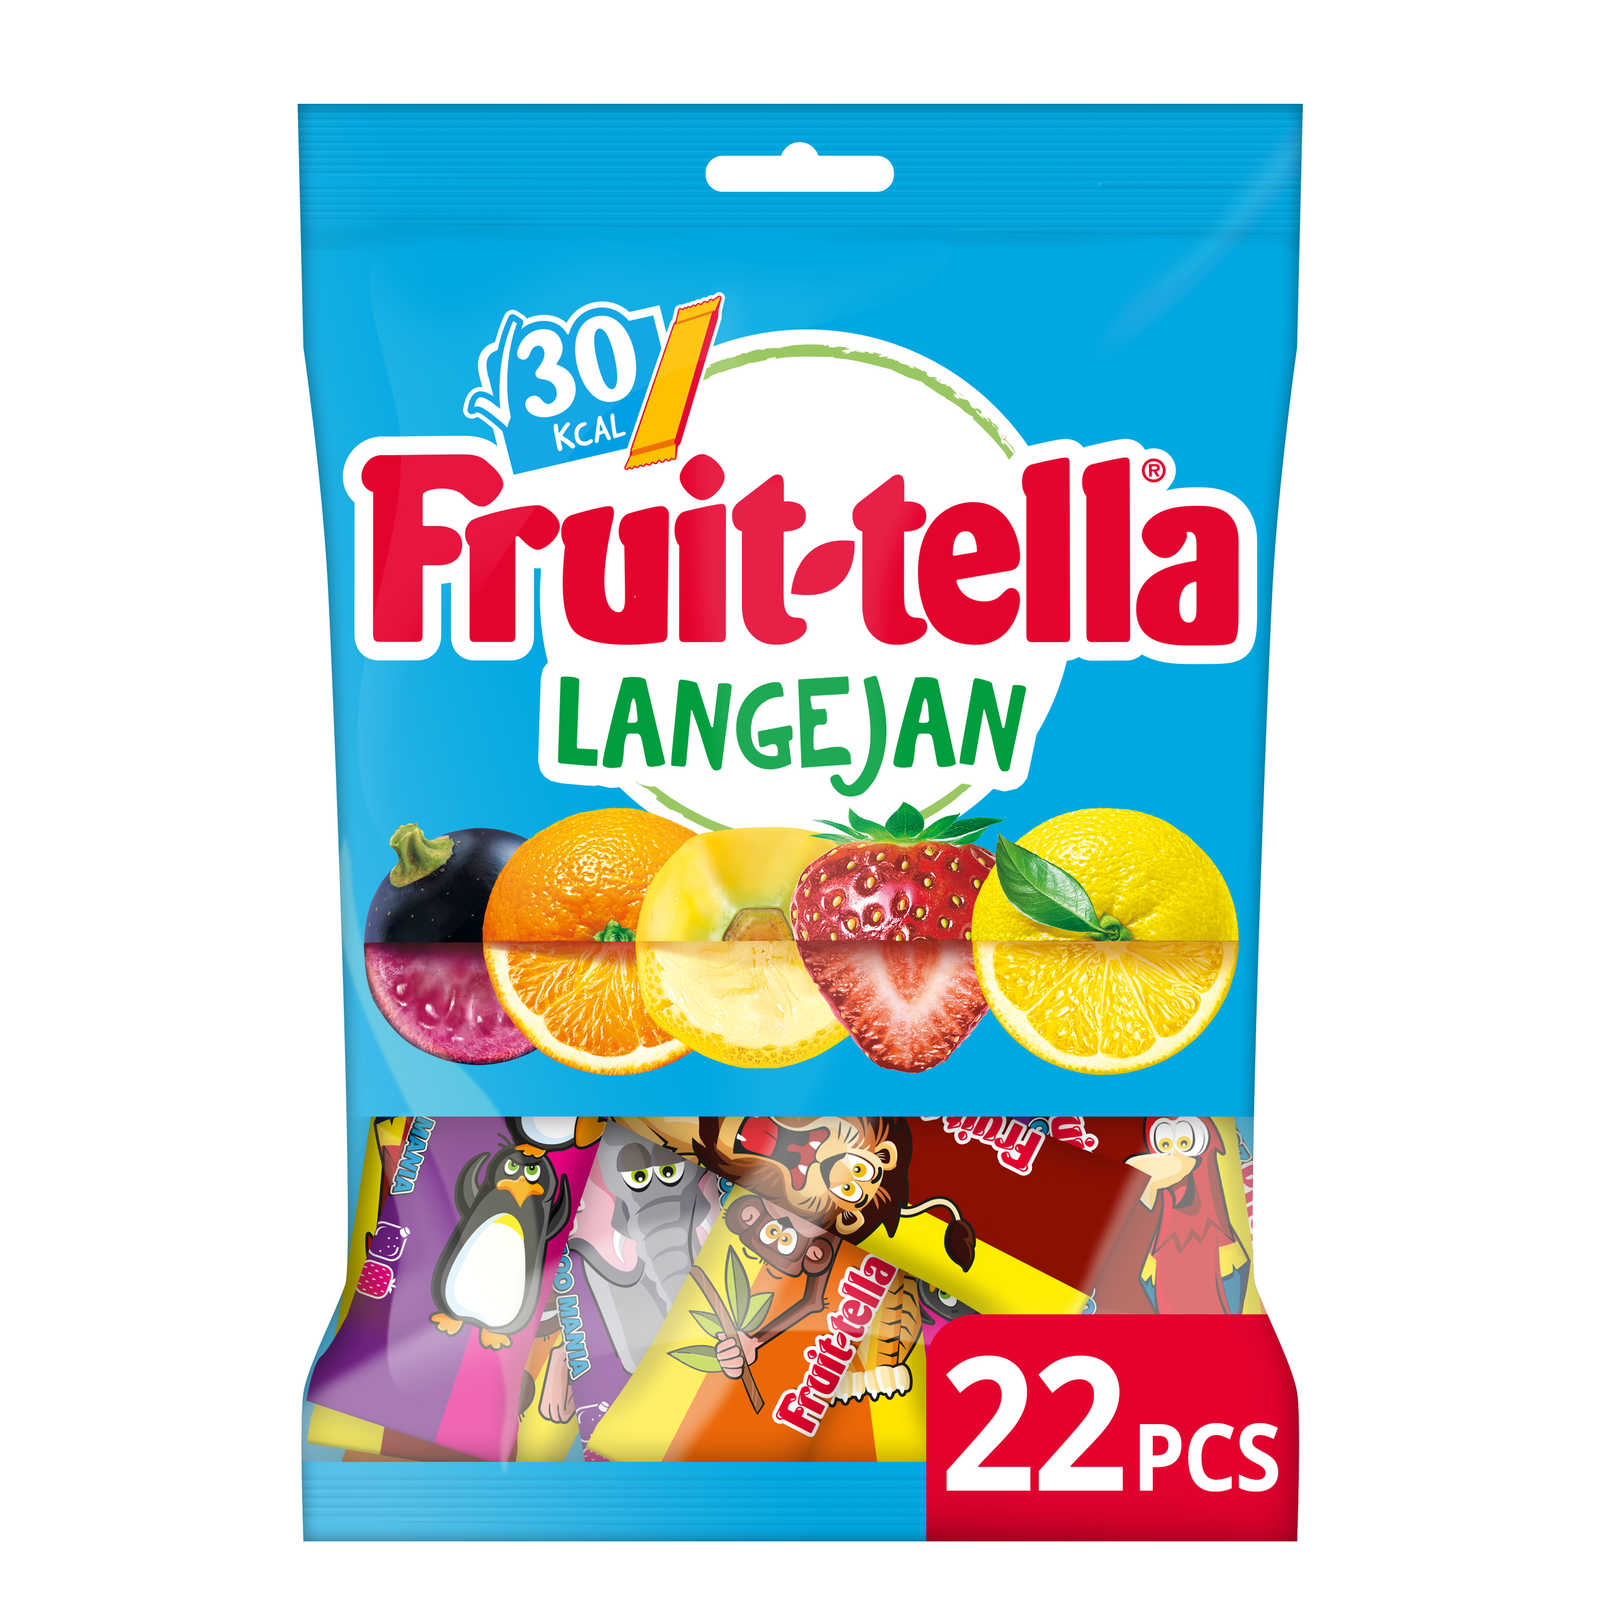 Fruittella